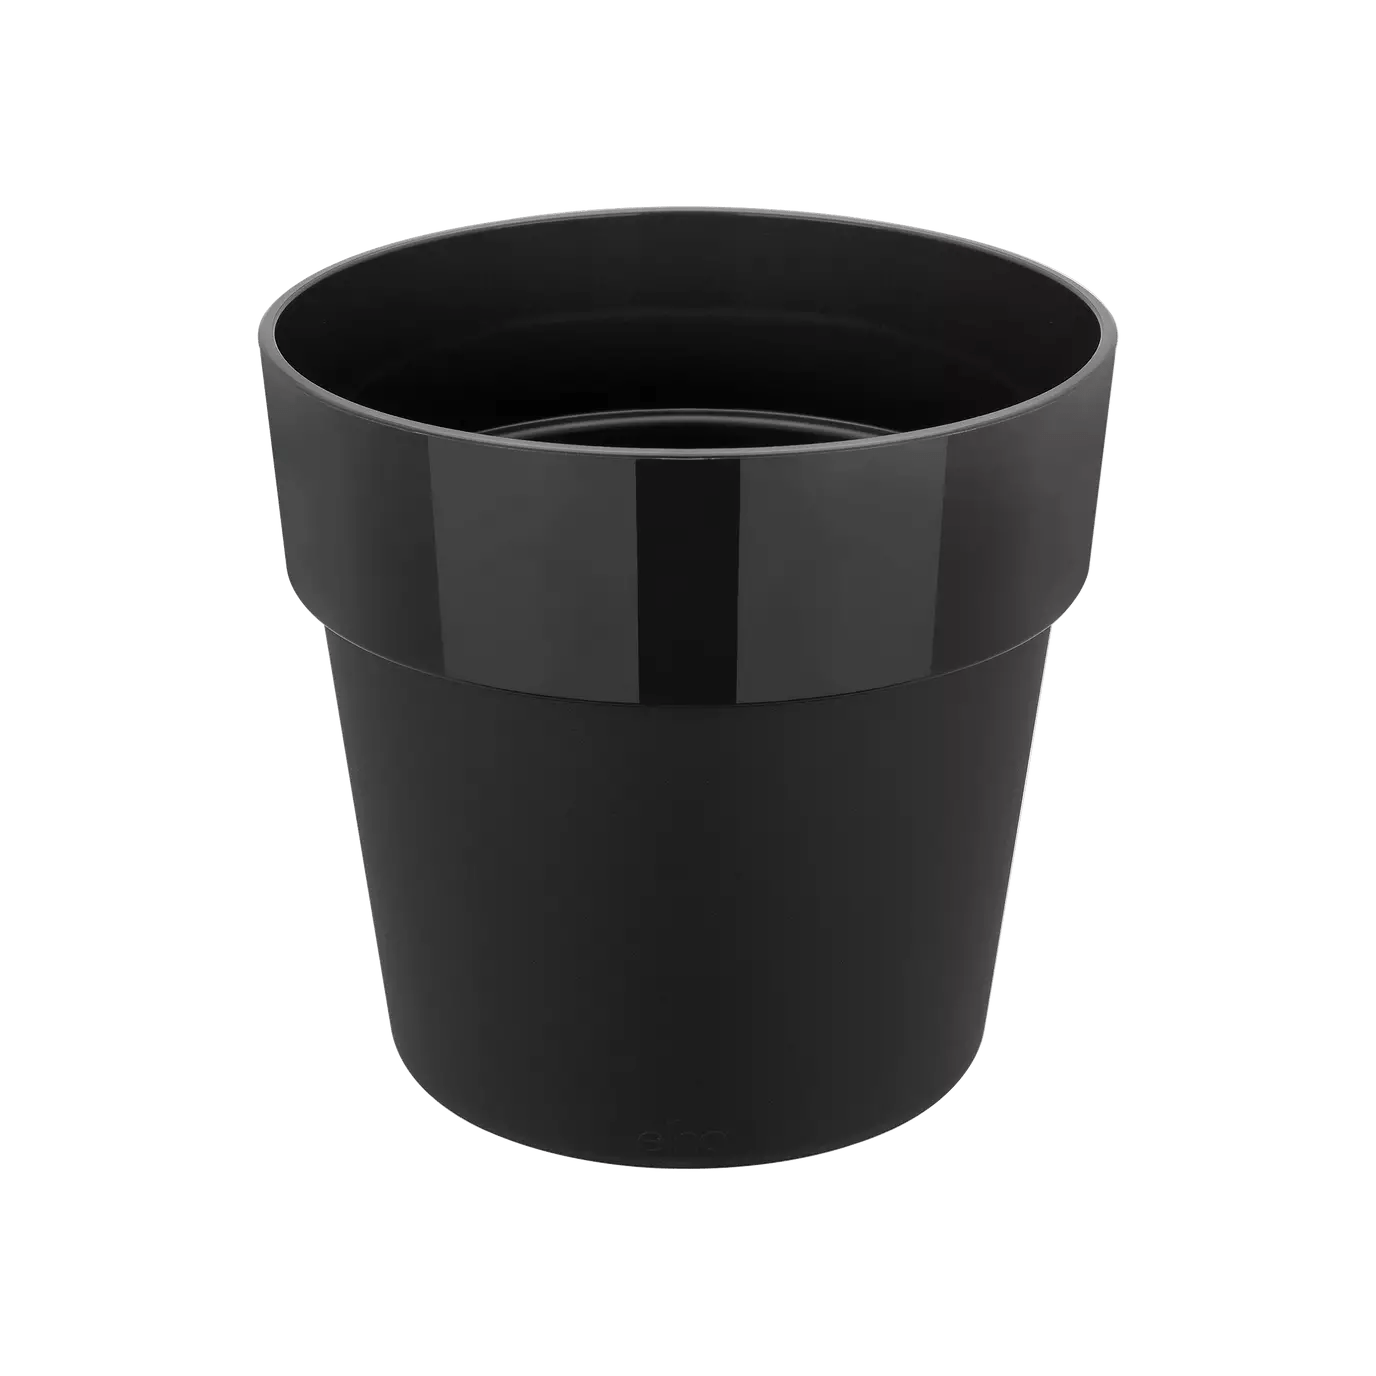 Elho Plant Pot Recycled Plastic Plant Pot - 'b.for original' in Living Black